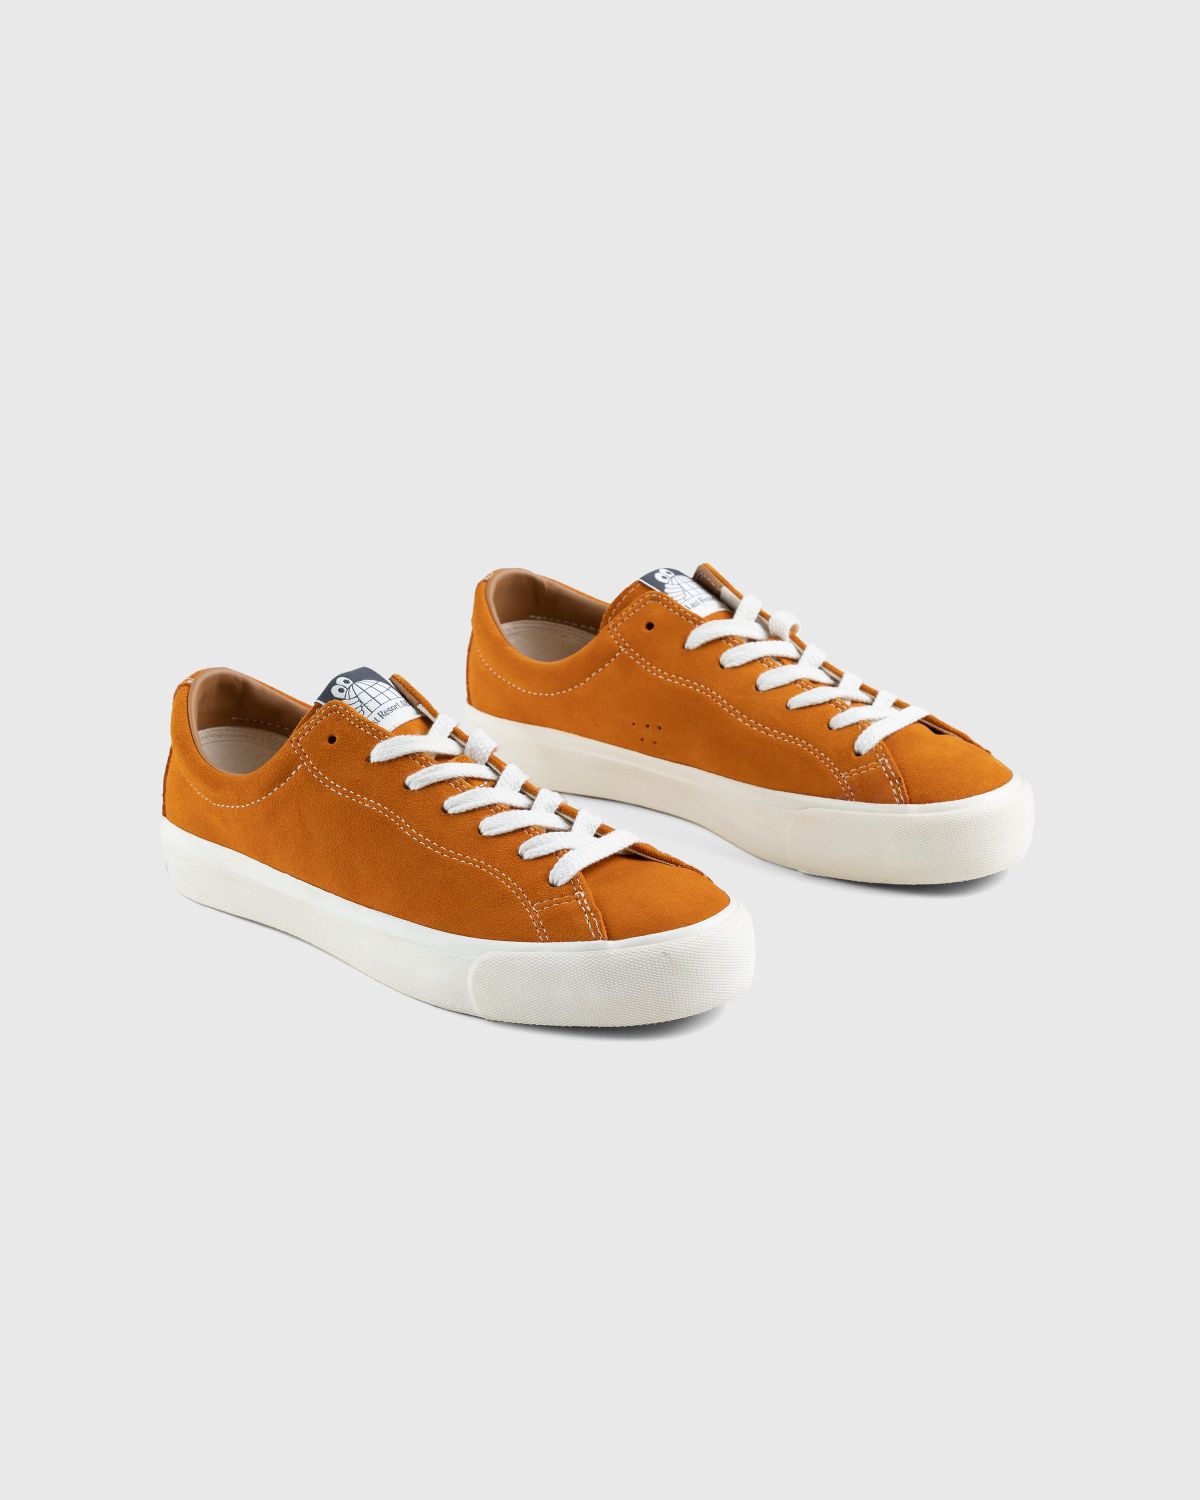 Last Resort AB – VM003 Suede Lo Cheddar/White - Sneakers - Orange - Image 4